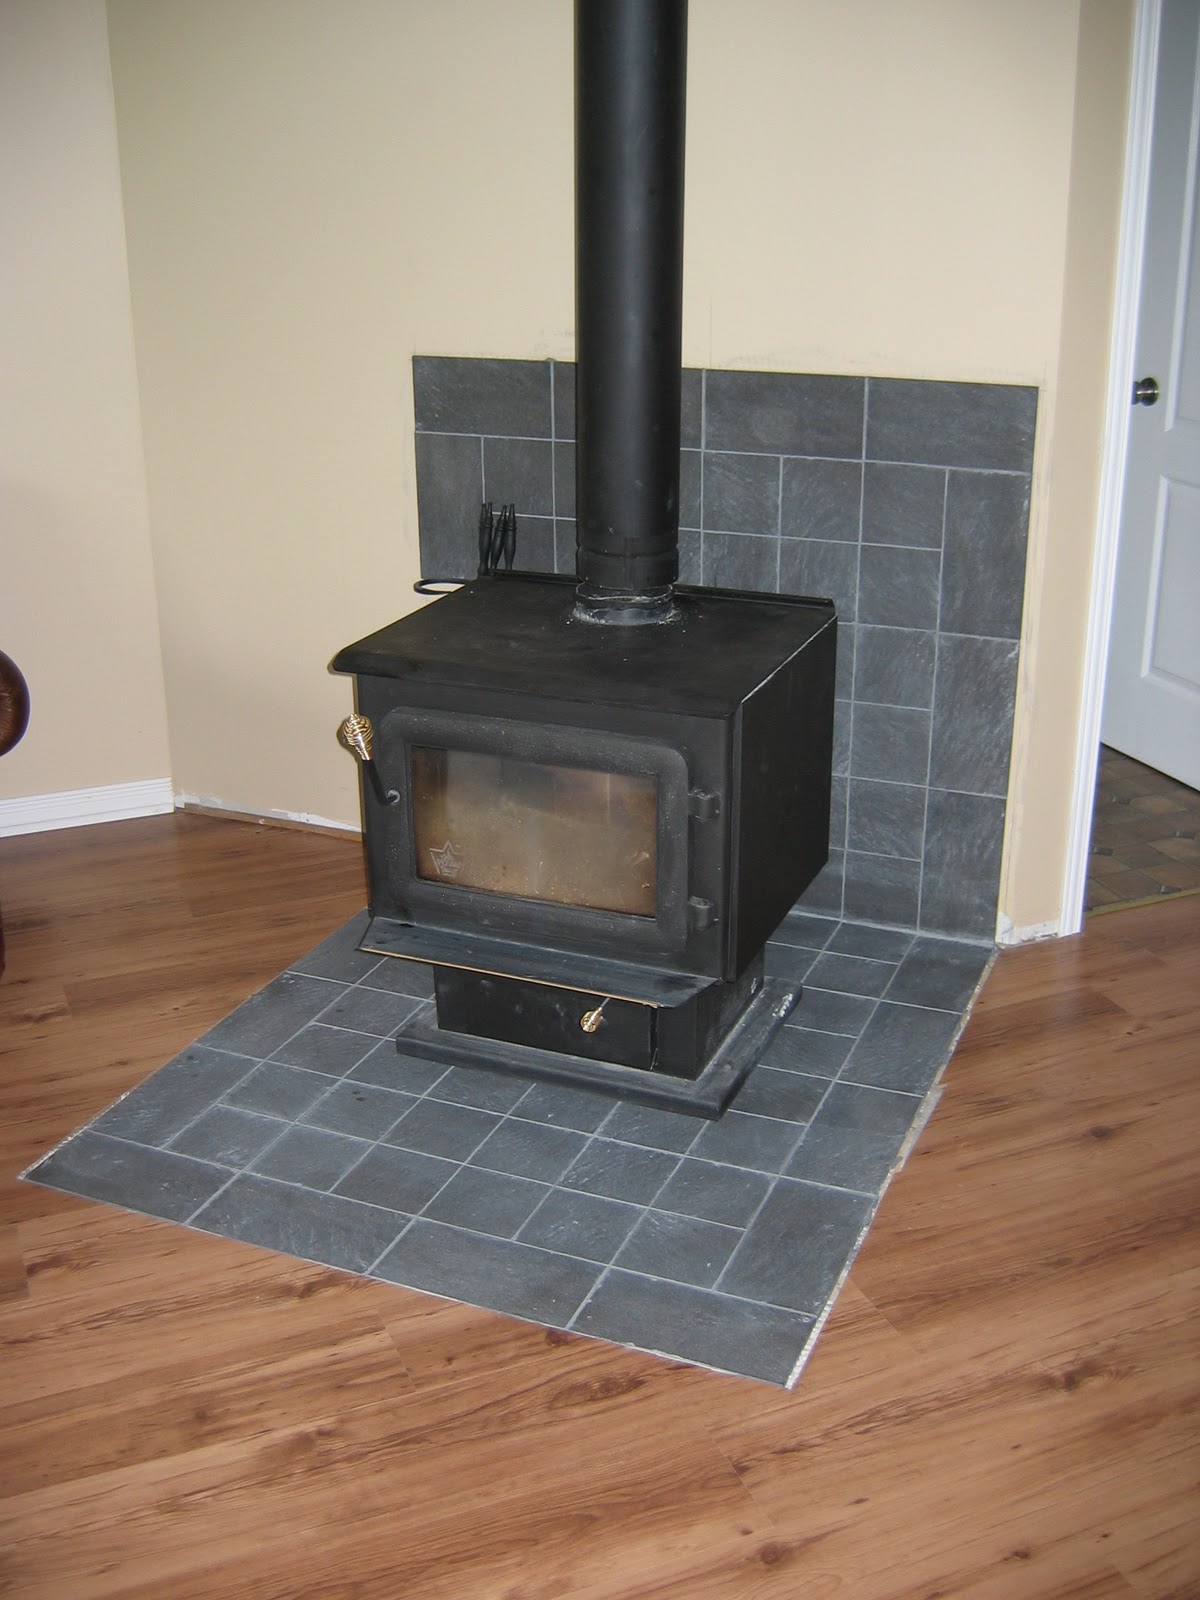 ... .com/wood-burning-stove/wood-stove-ceramic-tile.html